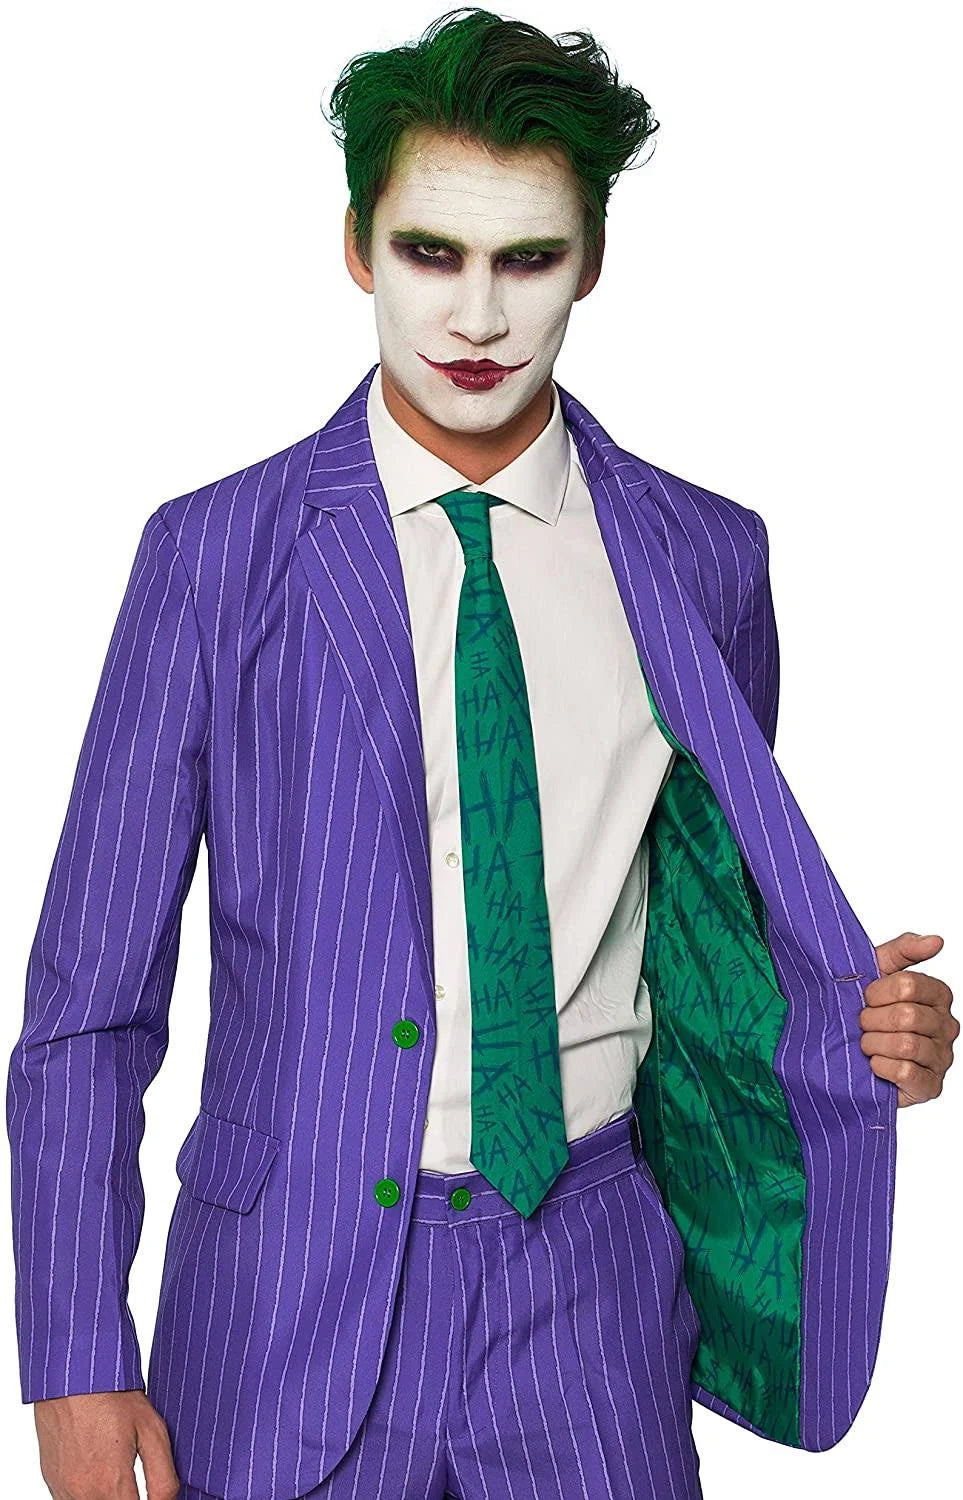 Joker Suit Costume Spirit Halloween